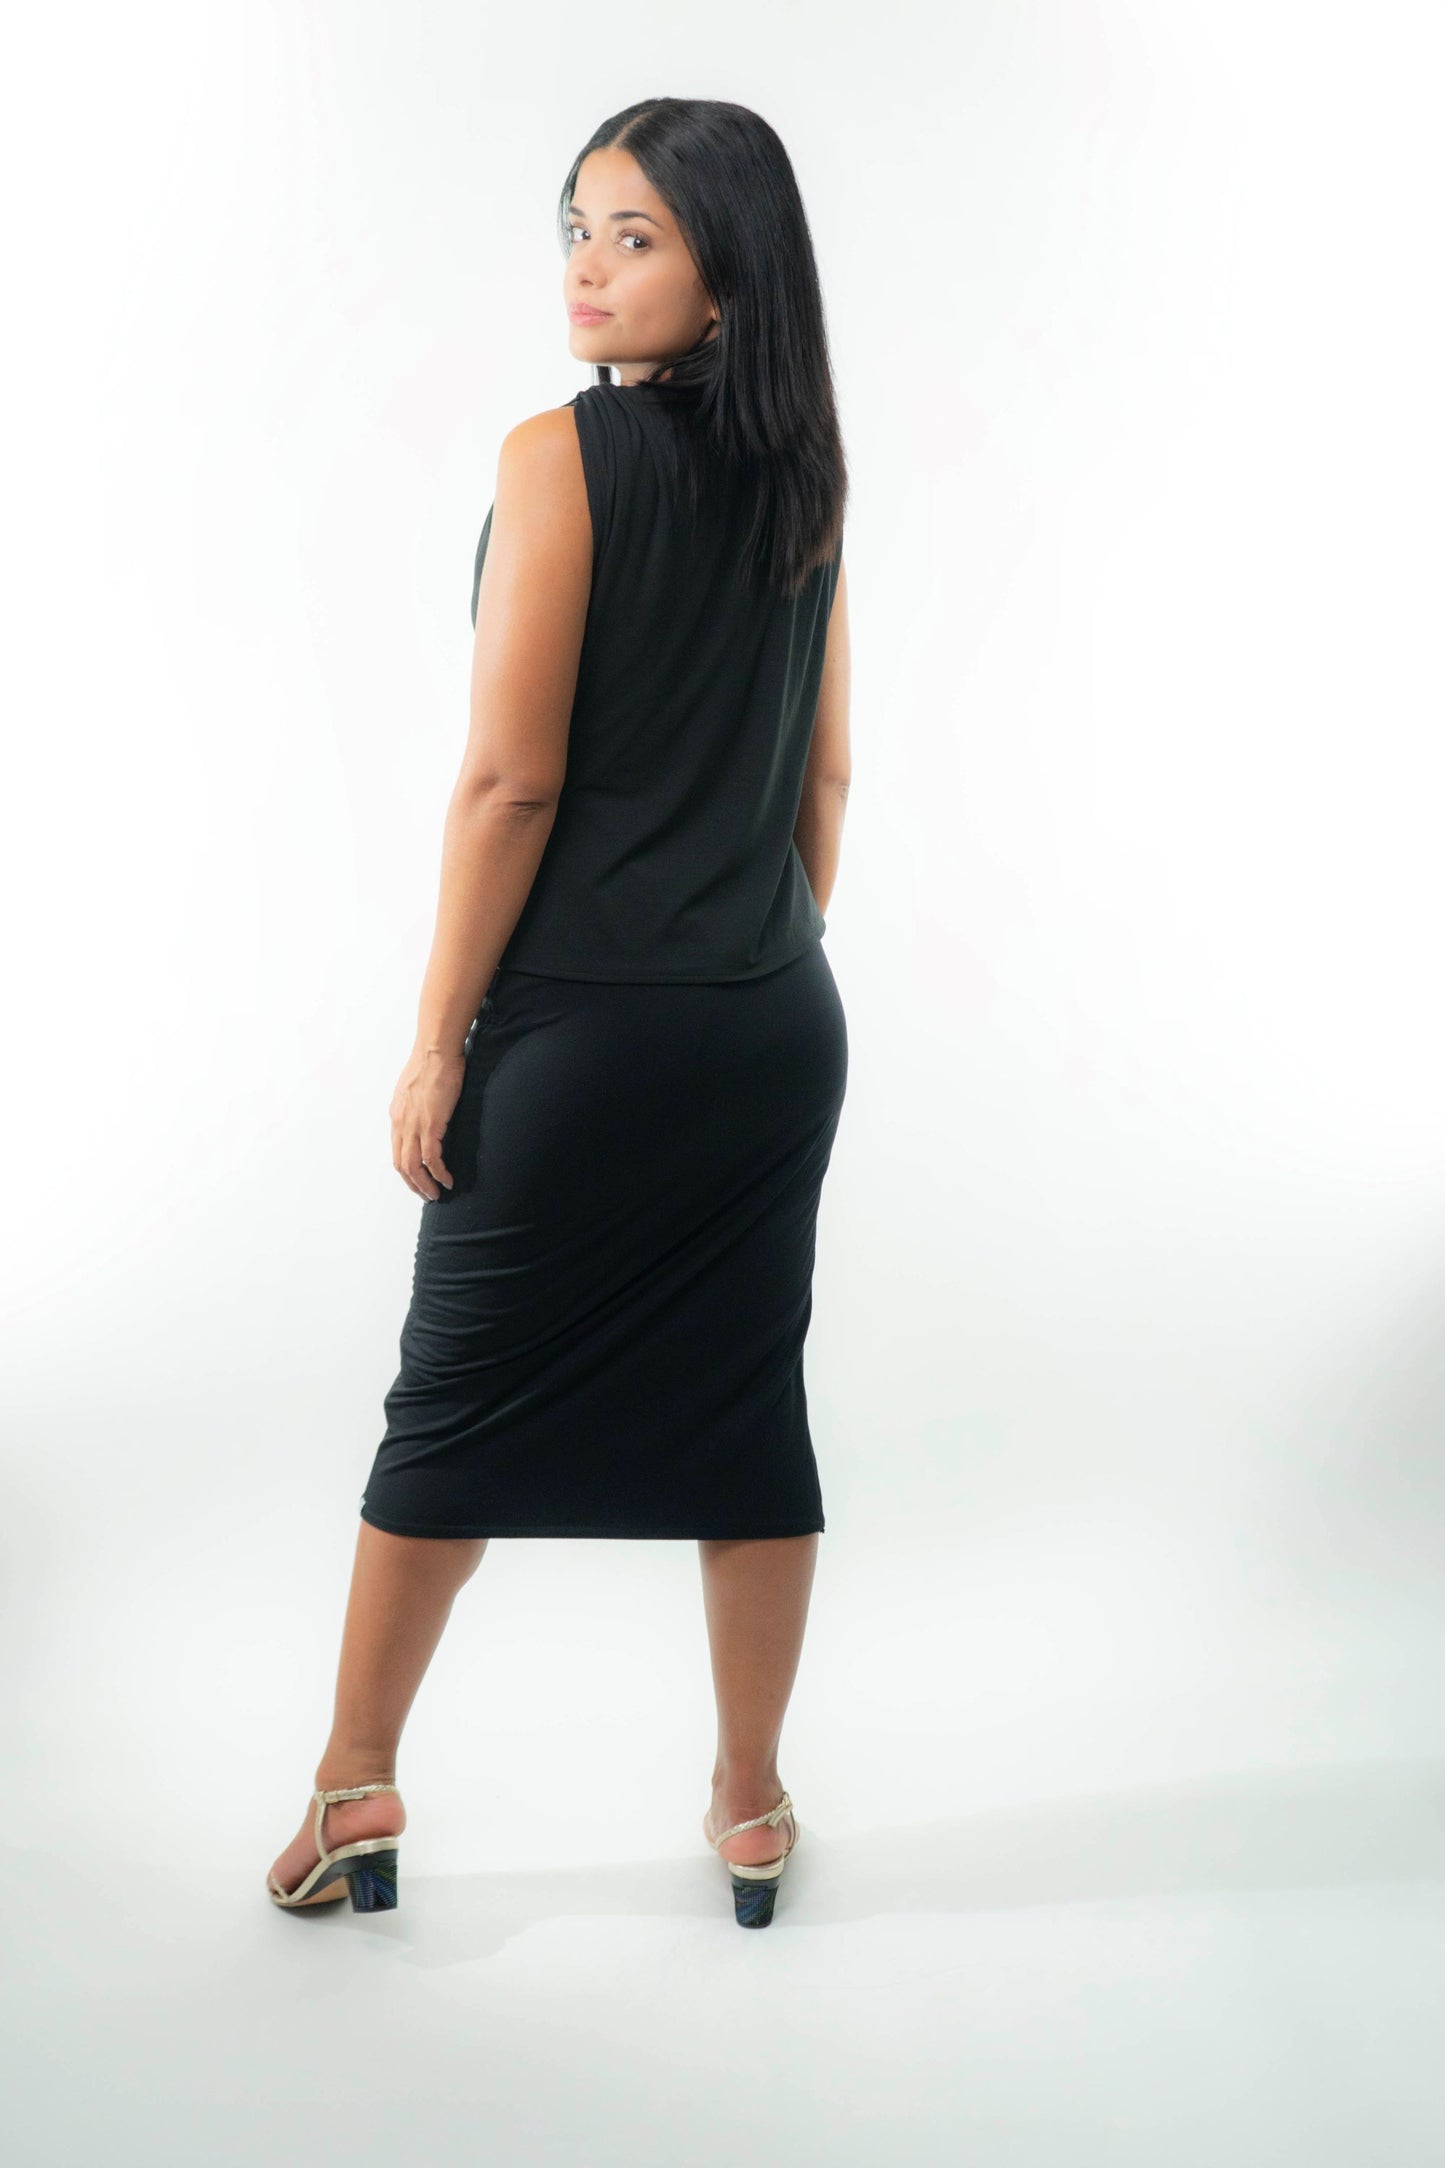 VALENCIA Skirt 8 in 1. Black/B&W Print